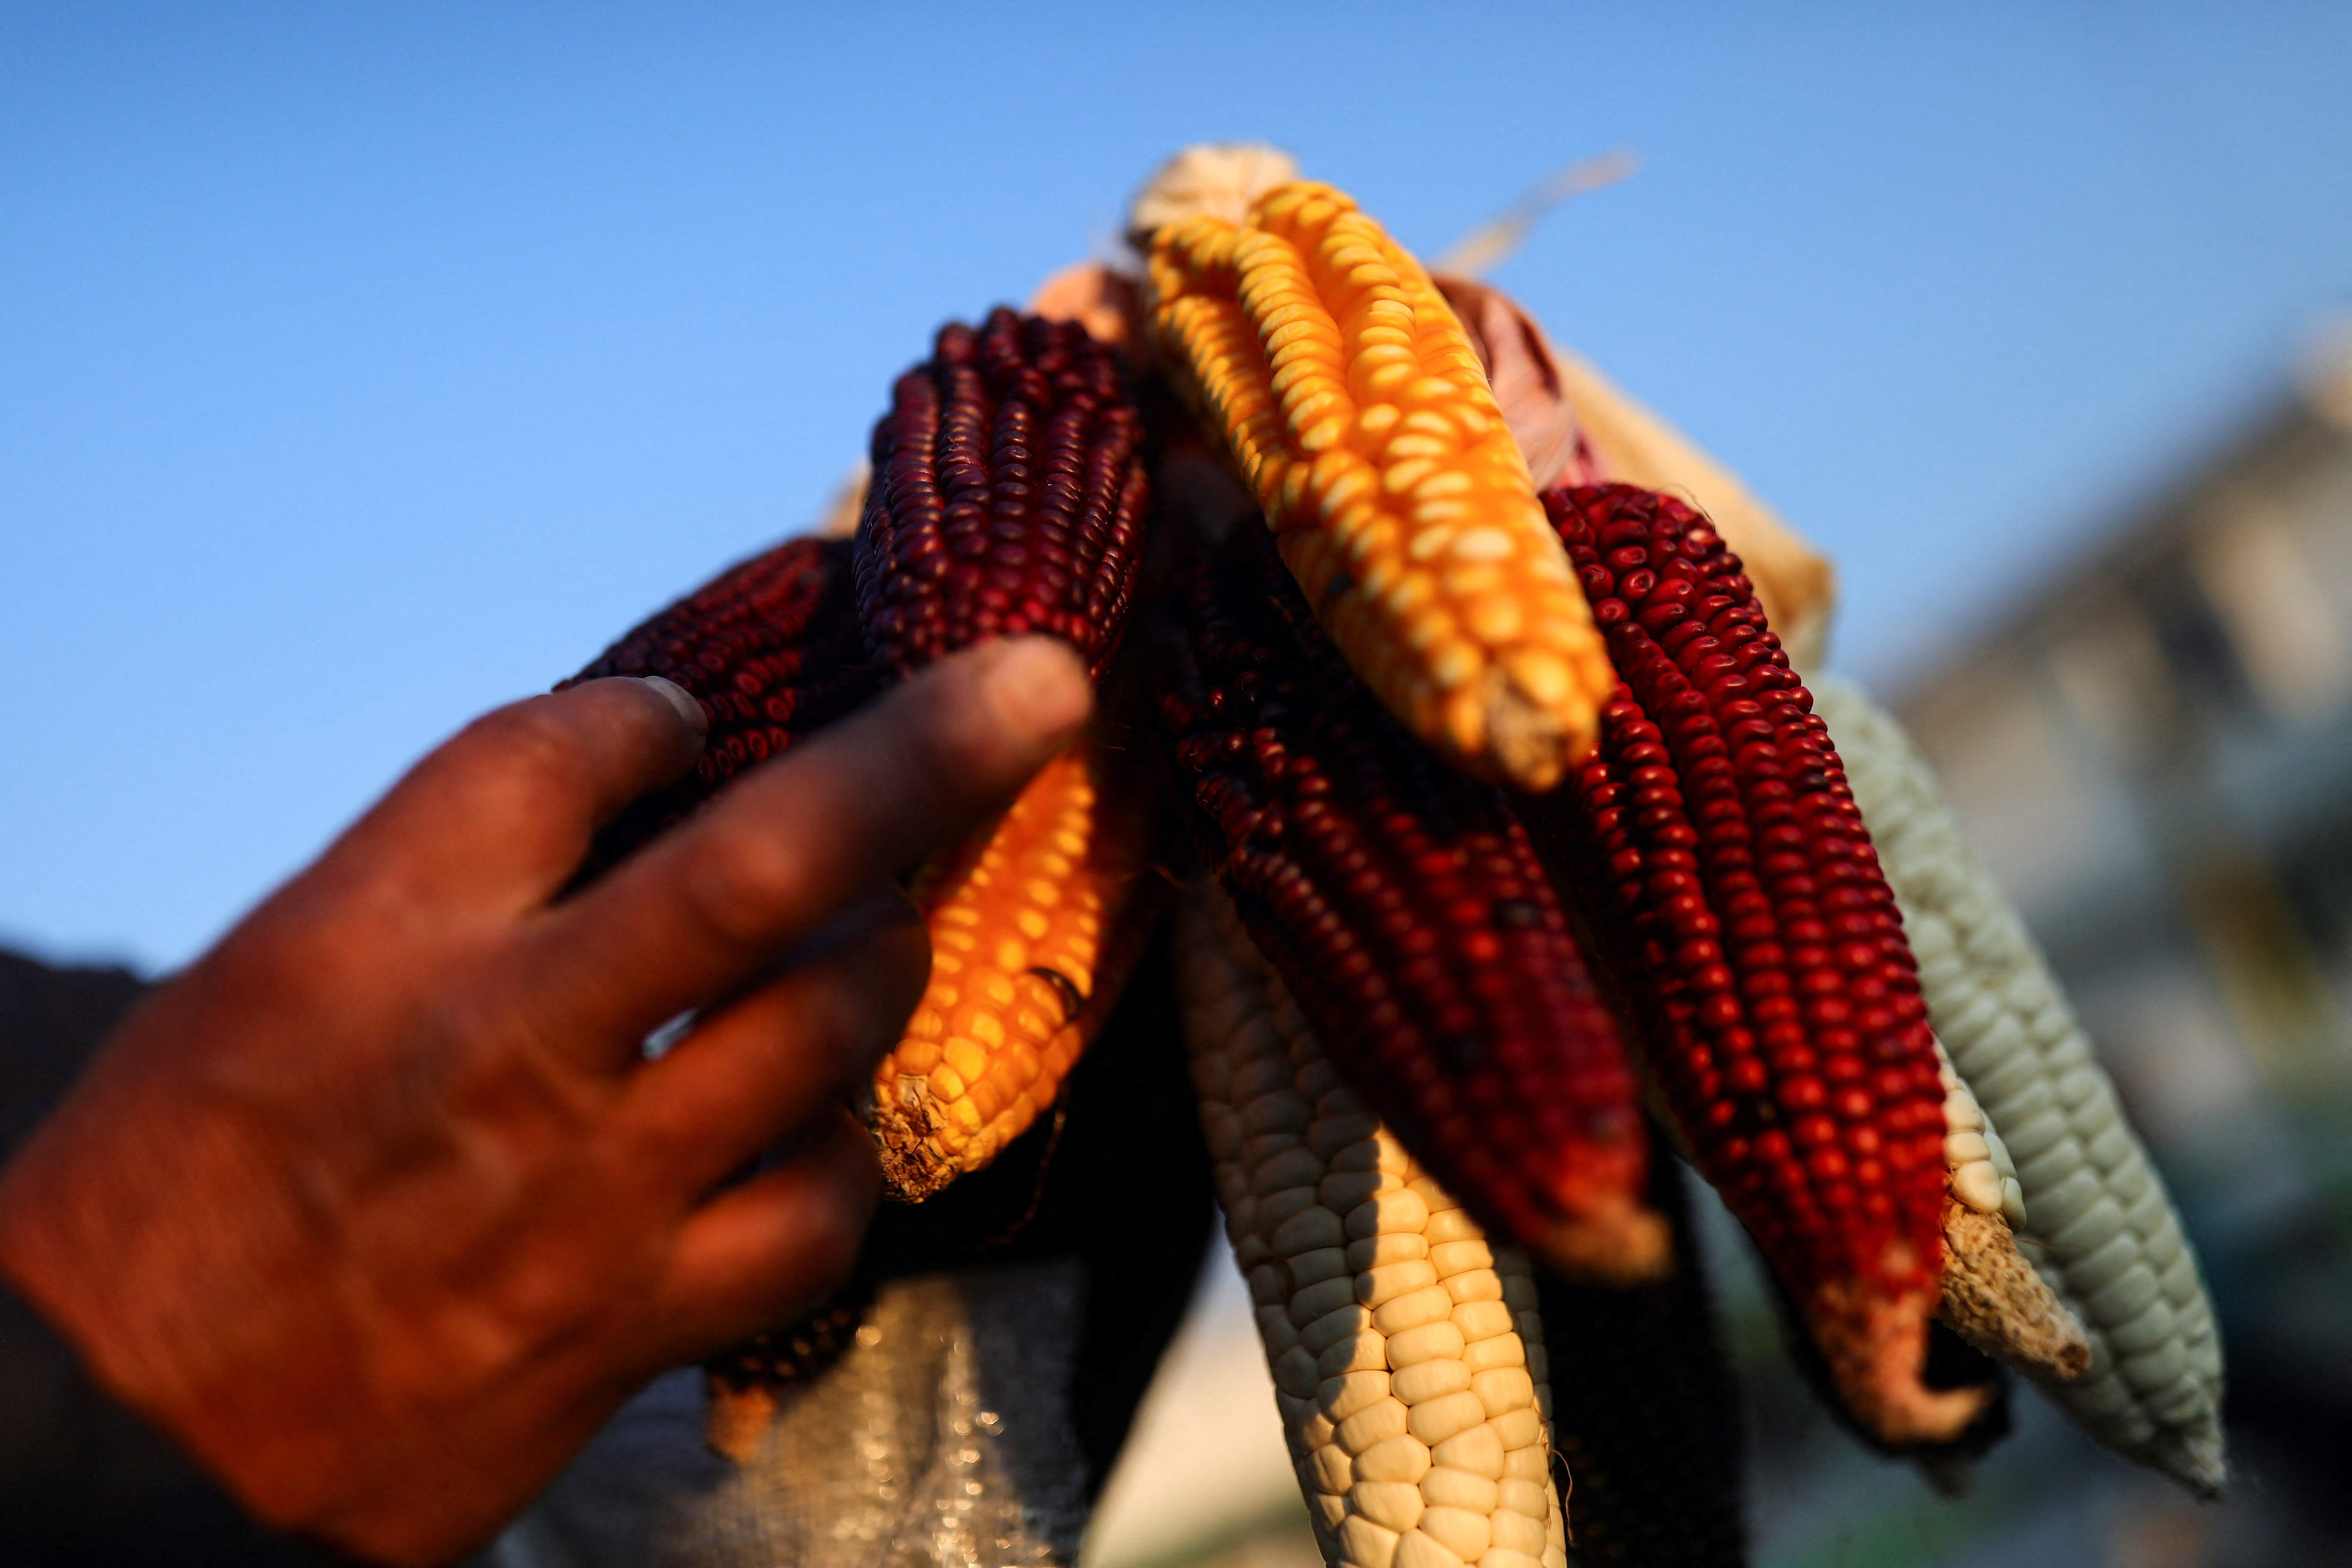 Un hombre muestra una mazorca de maiz en México (REUTERS/Edgard Garrido)